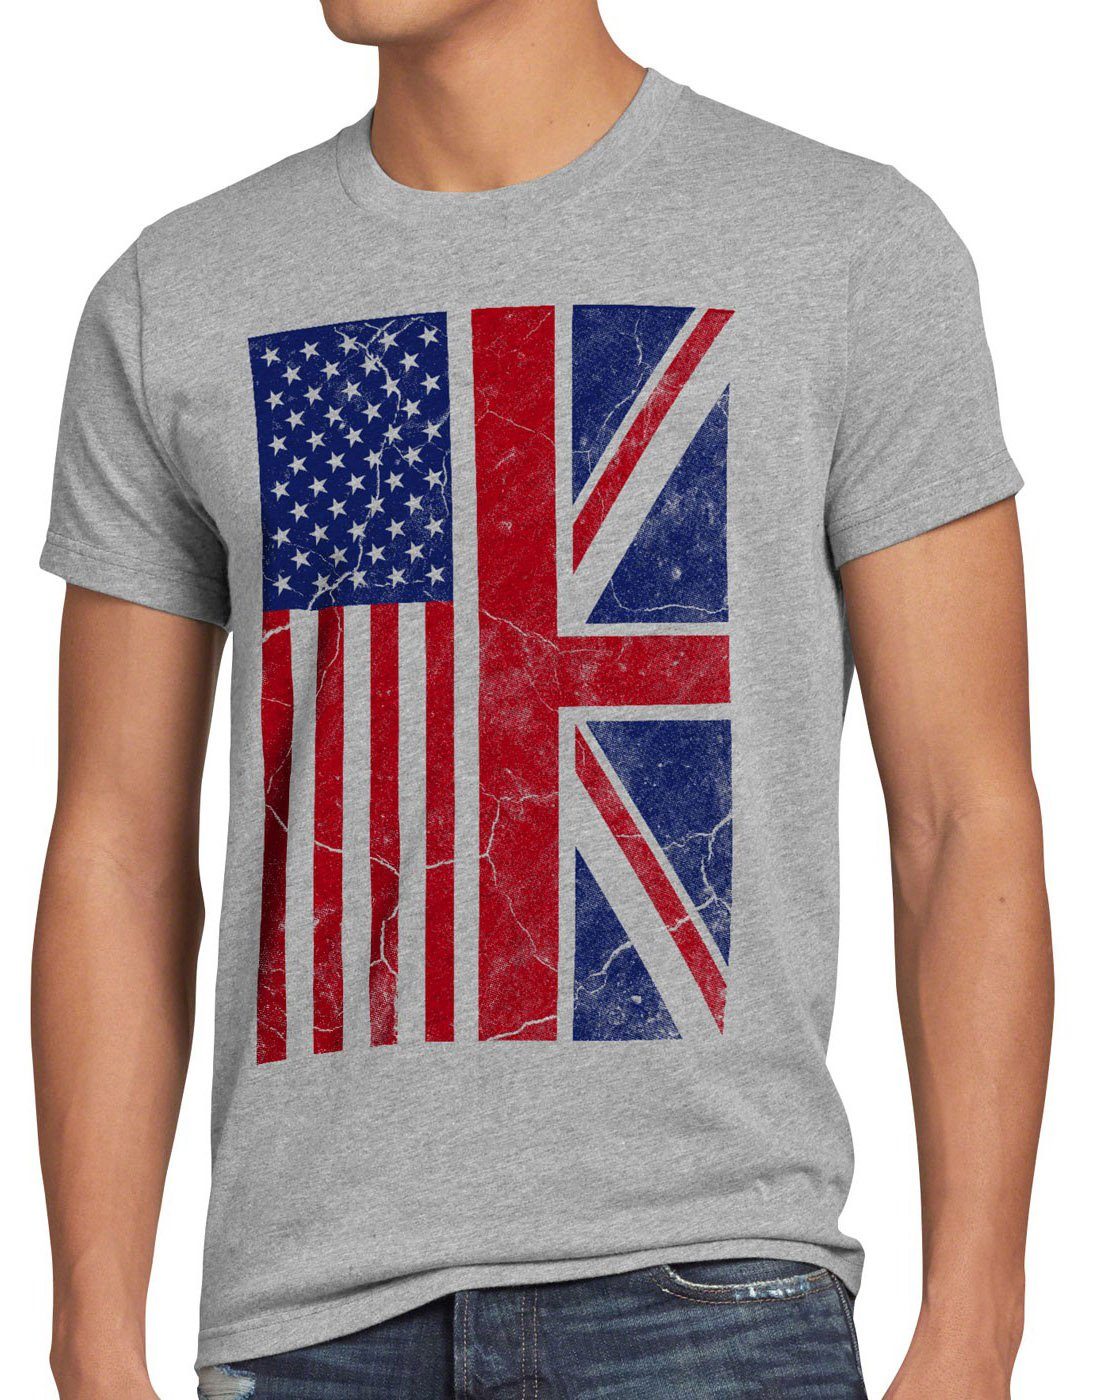 style3 Print-Shirt Herren T-Shirt Jack Amerika Flagge England Flag meliert Stars USA grau brexit Stripes Union